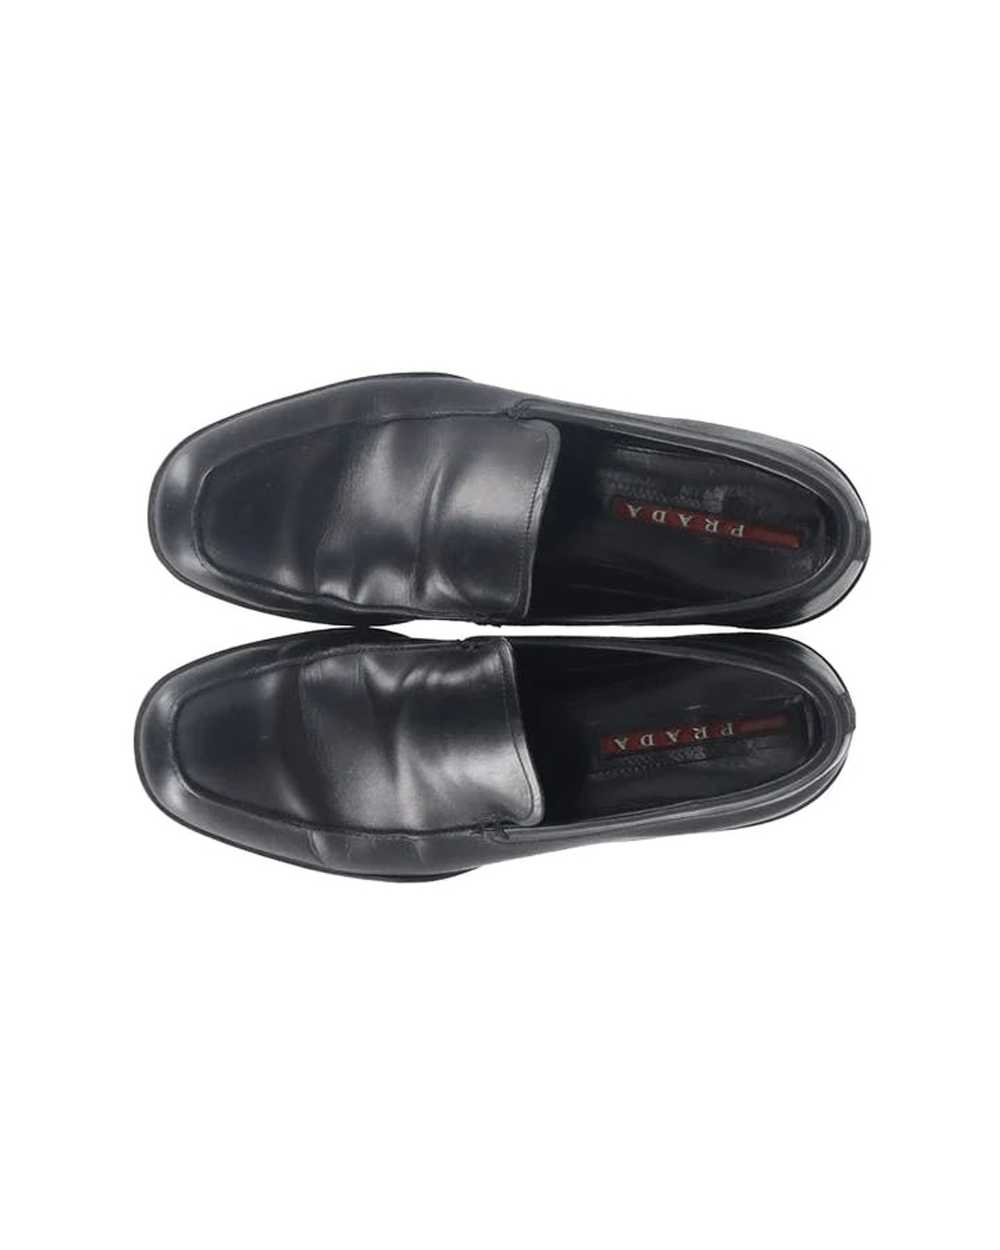 Prada o1b1f11ly0723 Loafers in Black - image 5